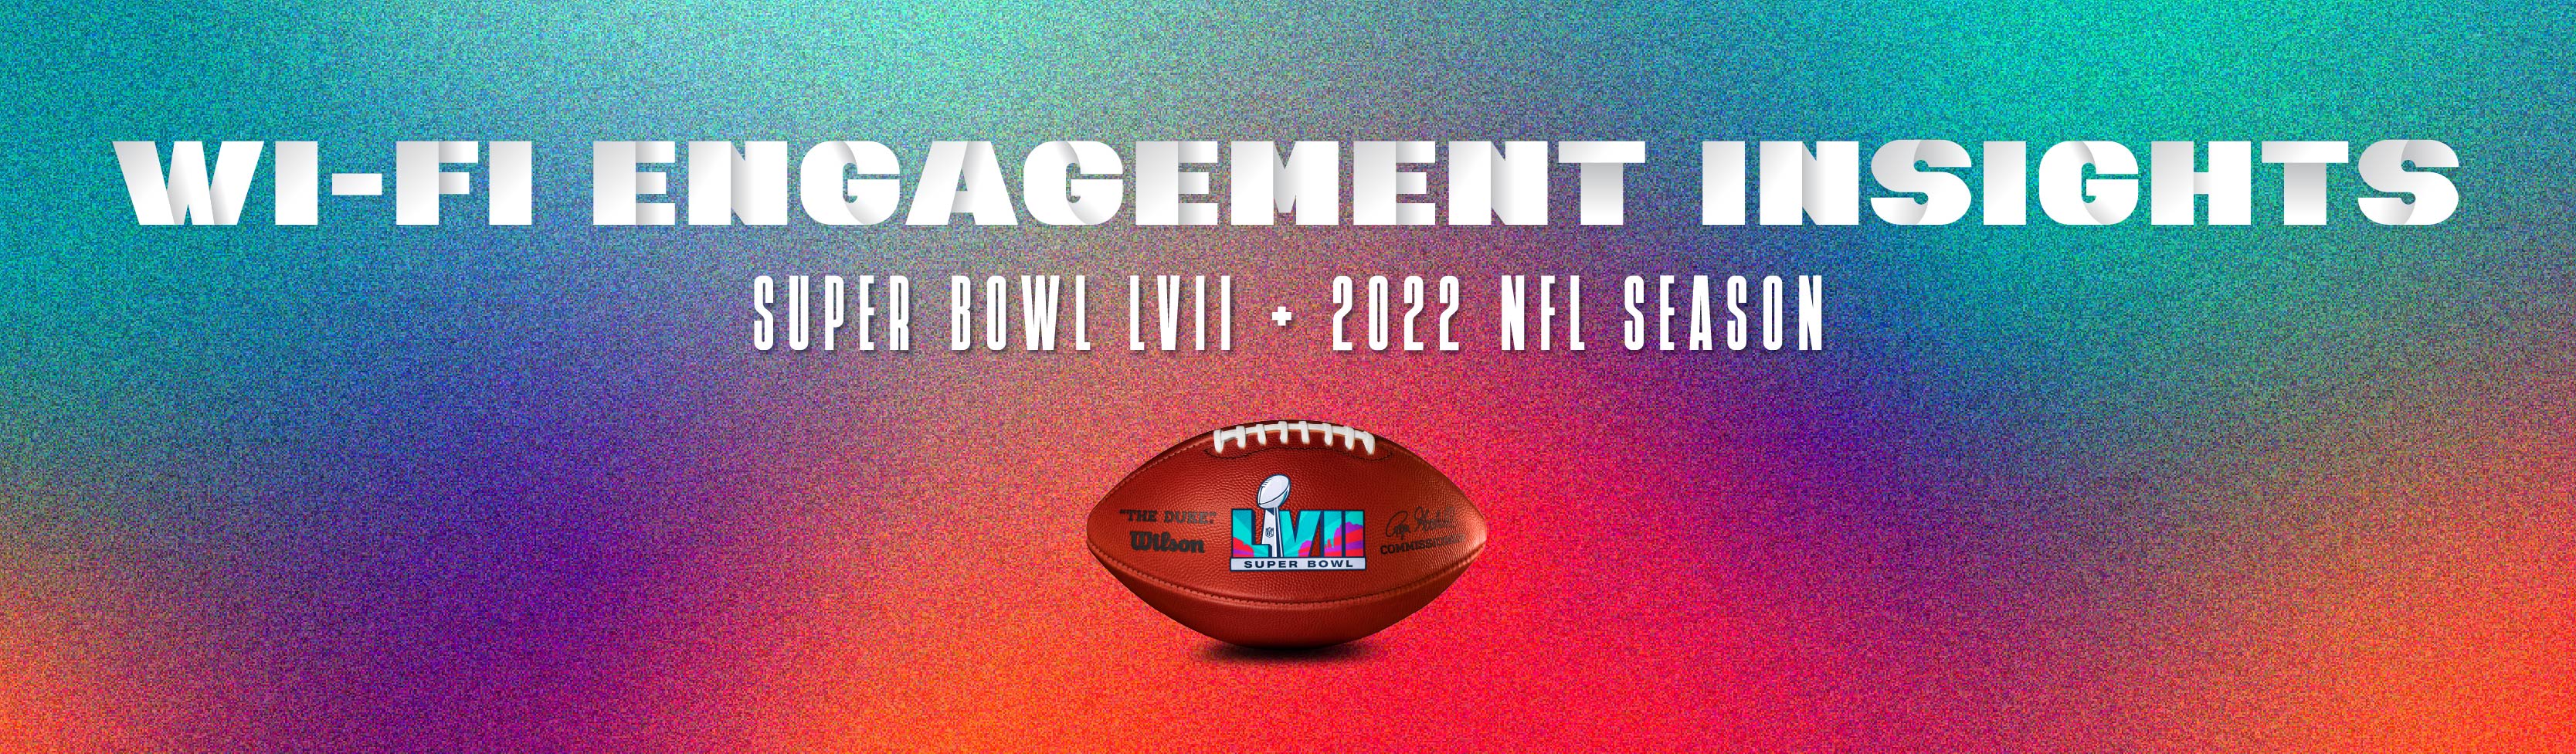 Blog-How-NFL-Fans-Used-Wi-Fi-at-Super-Bowl-LVII-banner